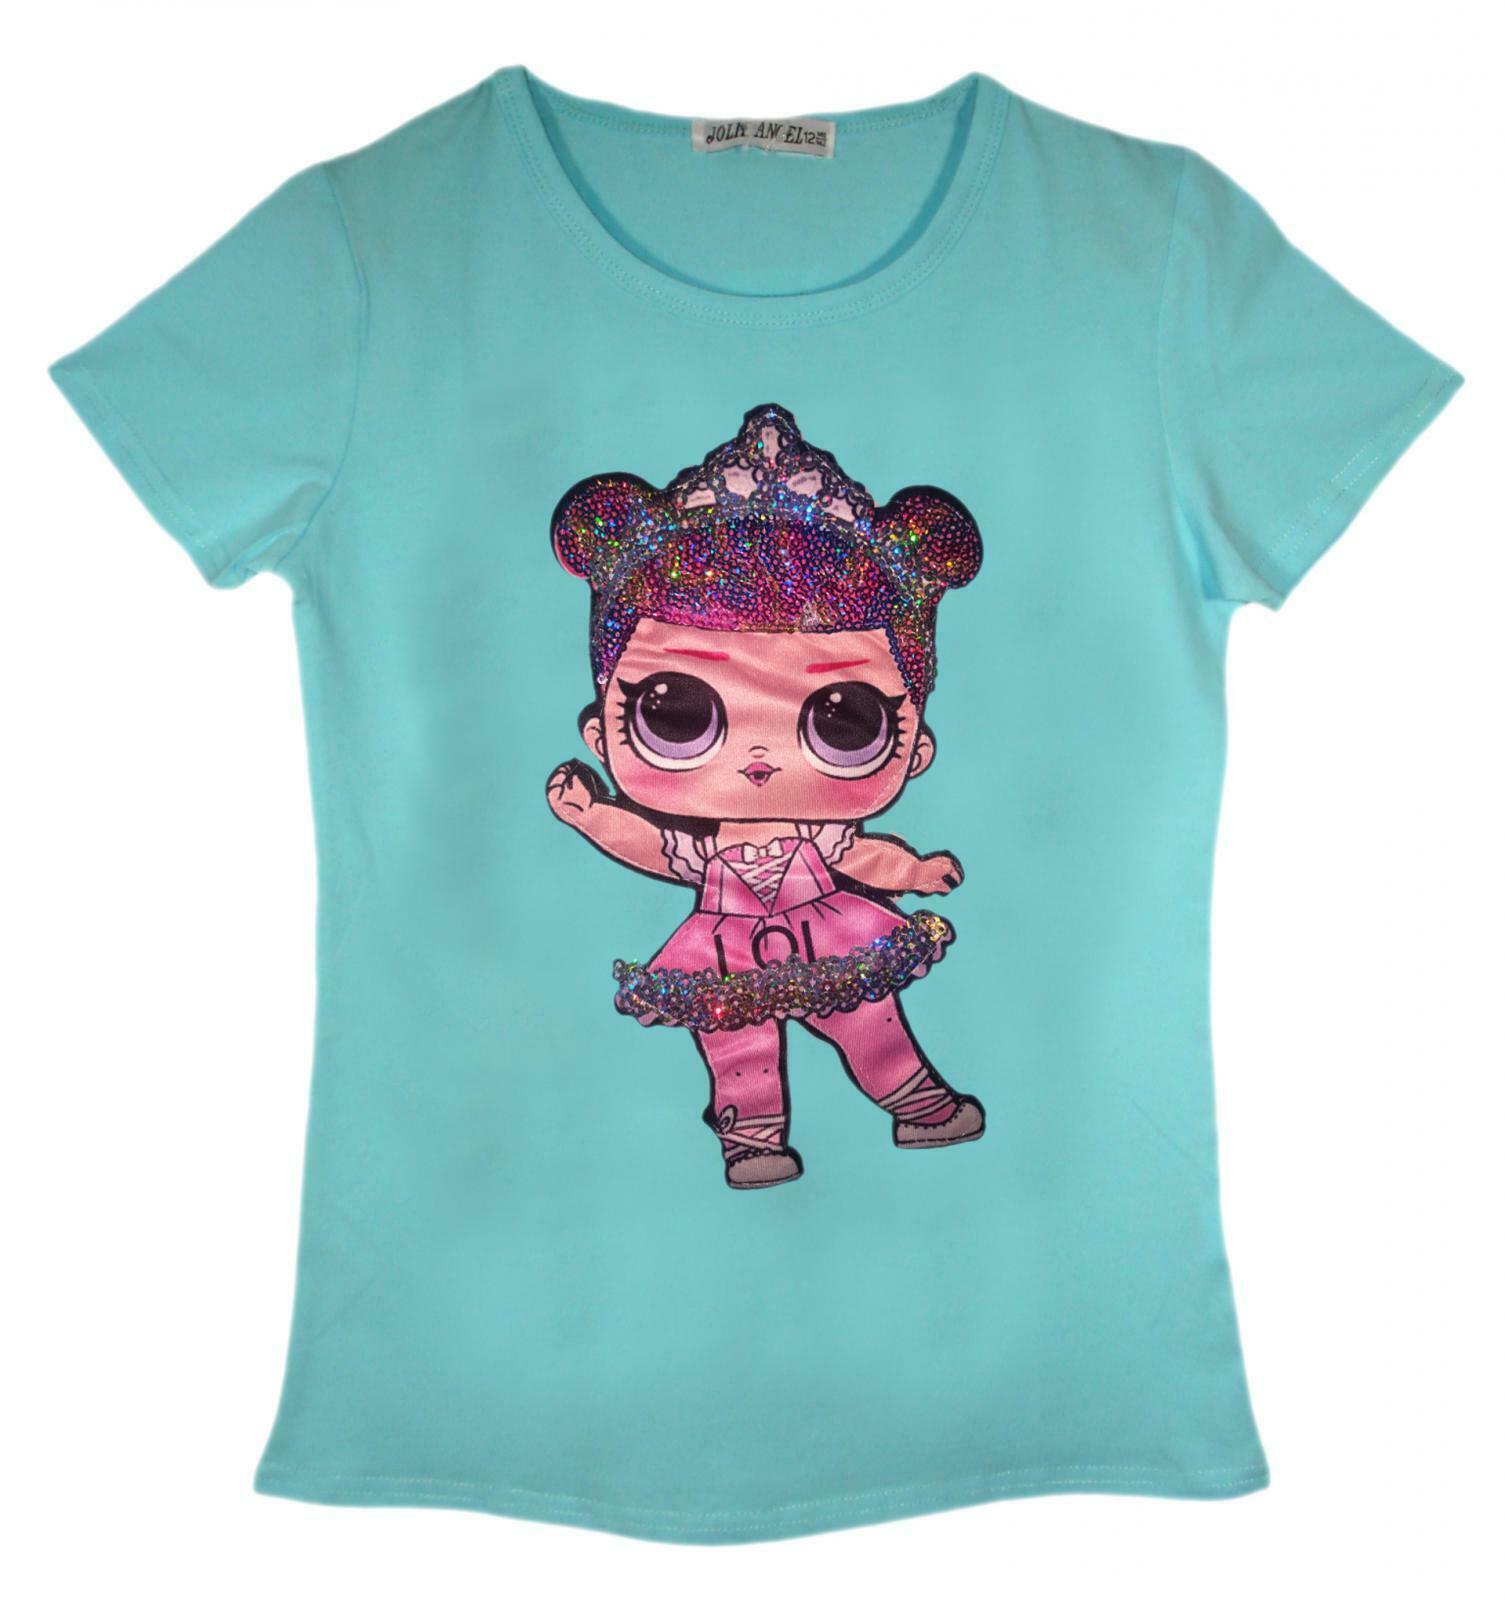 Lol Doll T Shirt Surprise Kids Girls Doll T-shirts Tops Cotton Tee 3-14